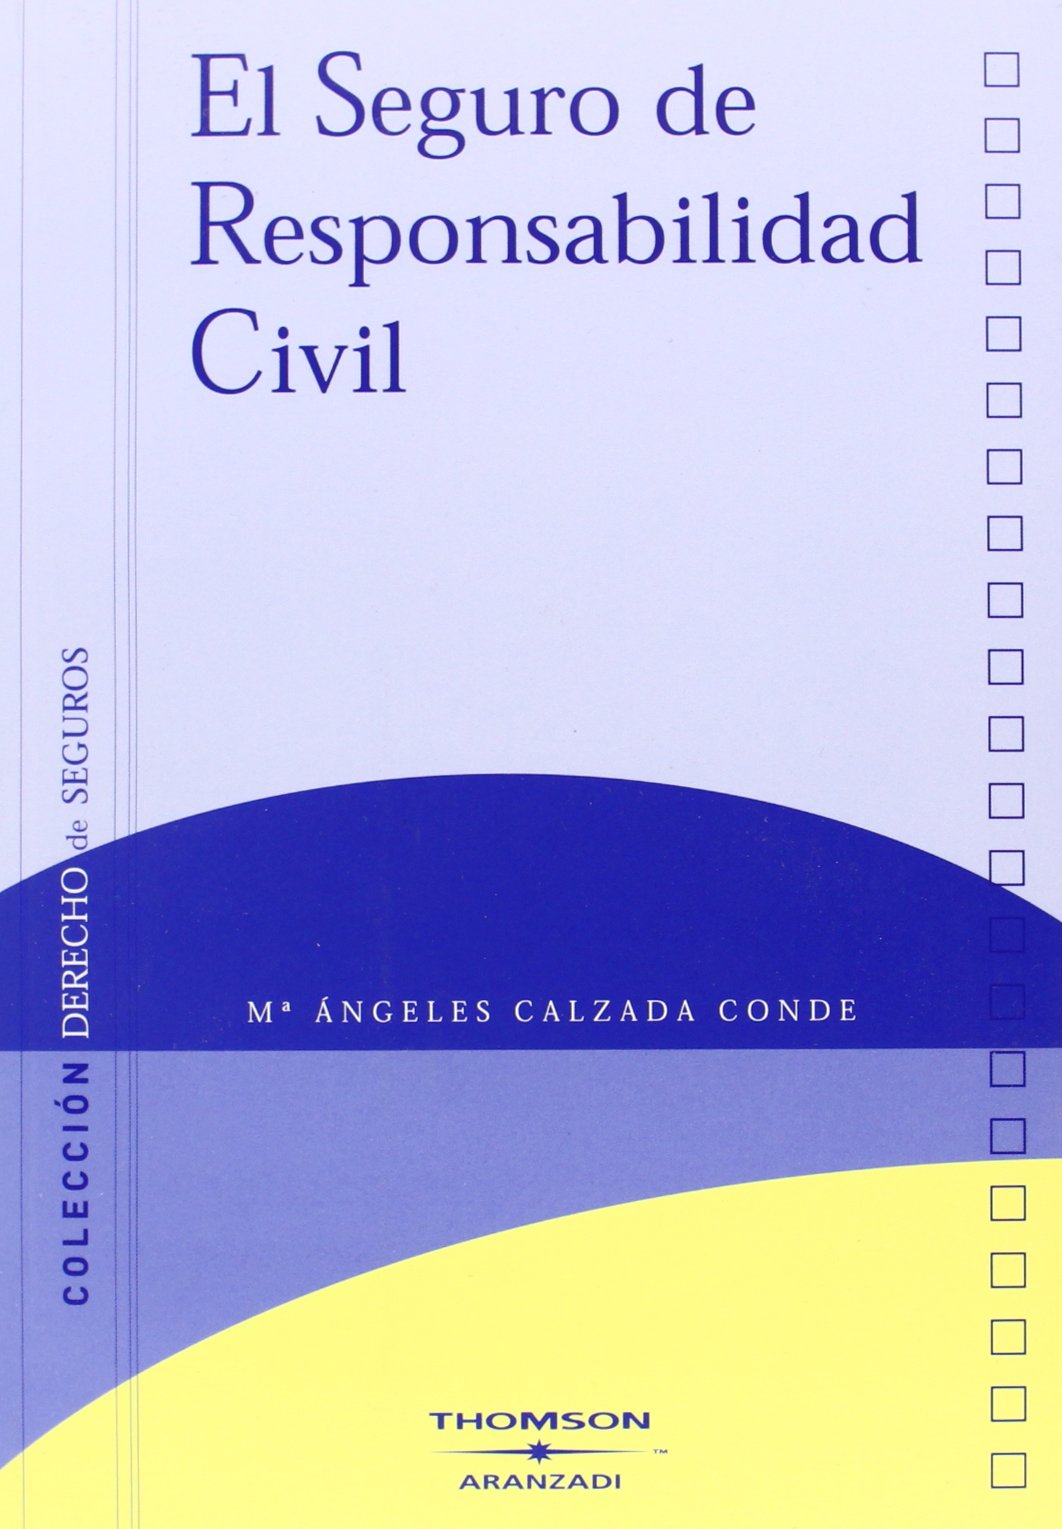 El seguro de Responsabilidad Civil